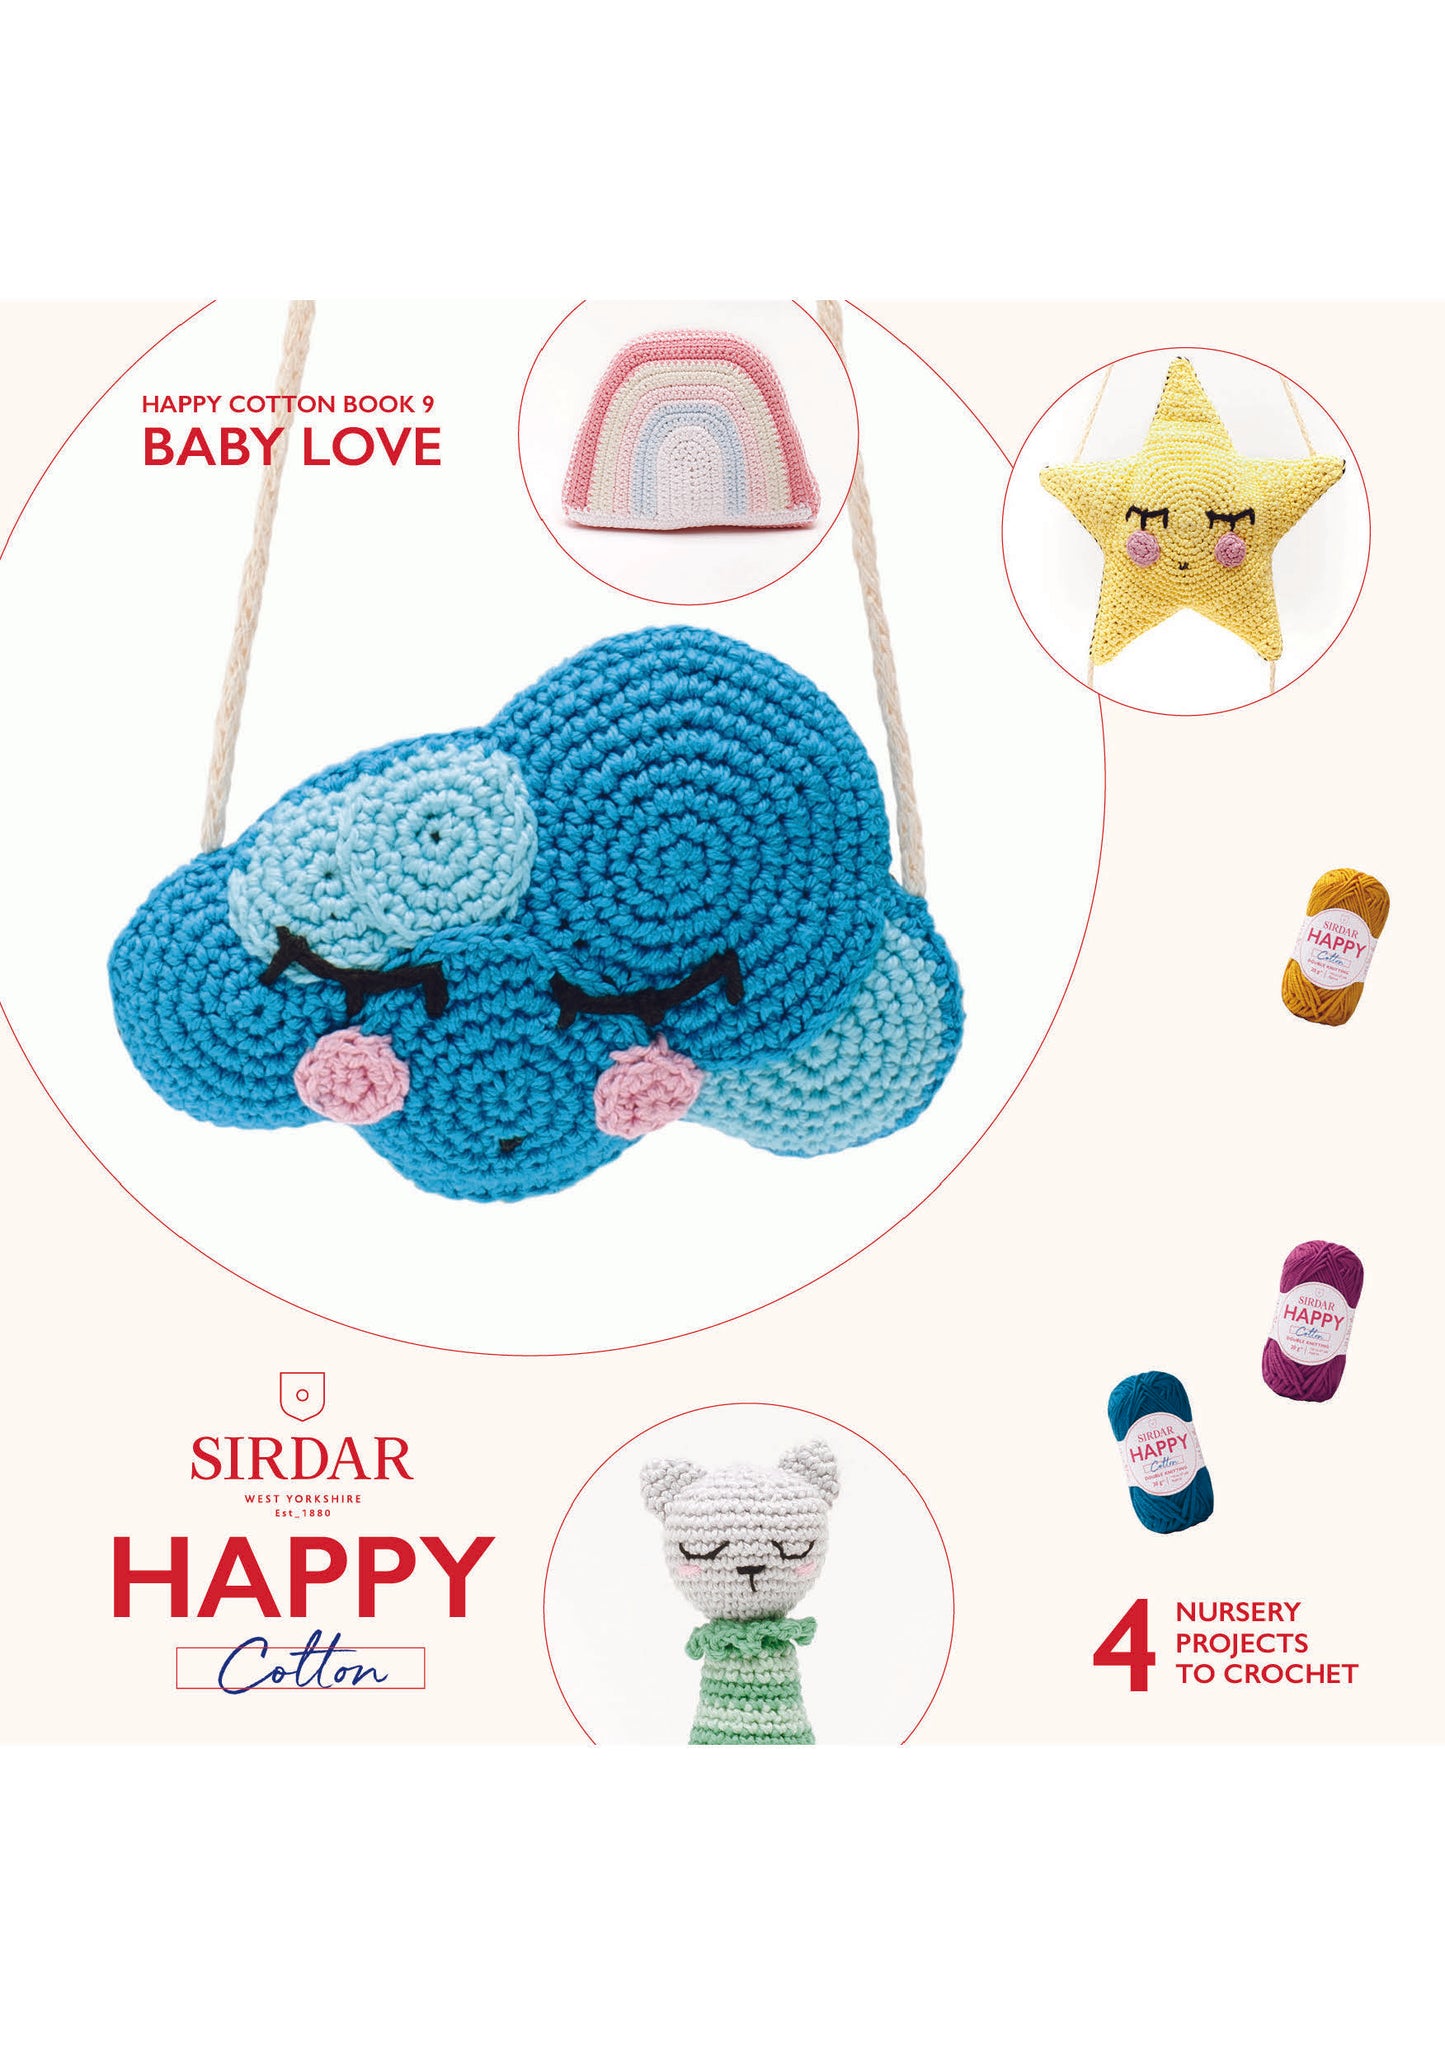 Sirdar Happy Cotton Book 9 - Baby Love